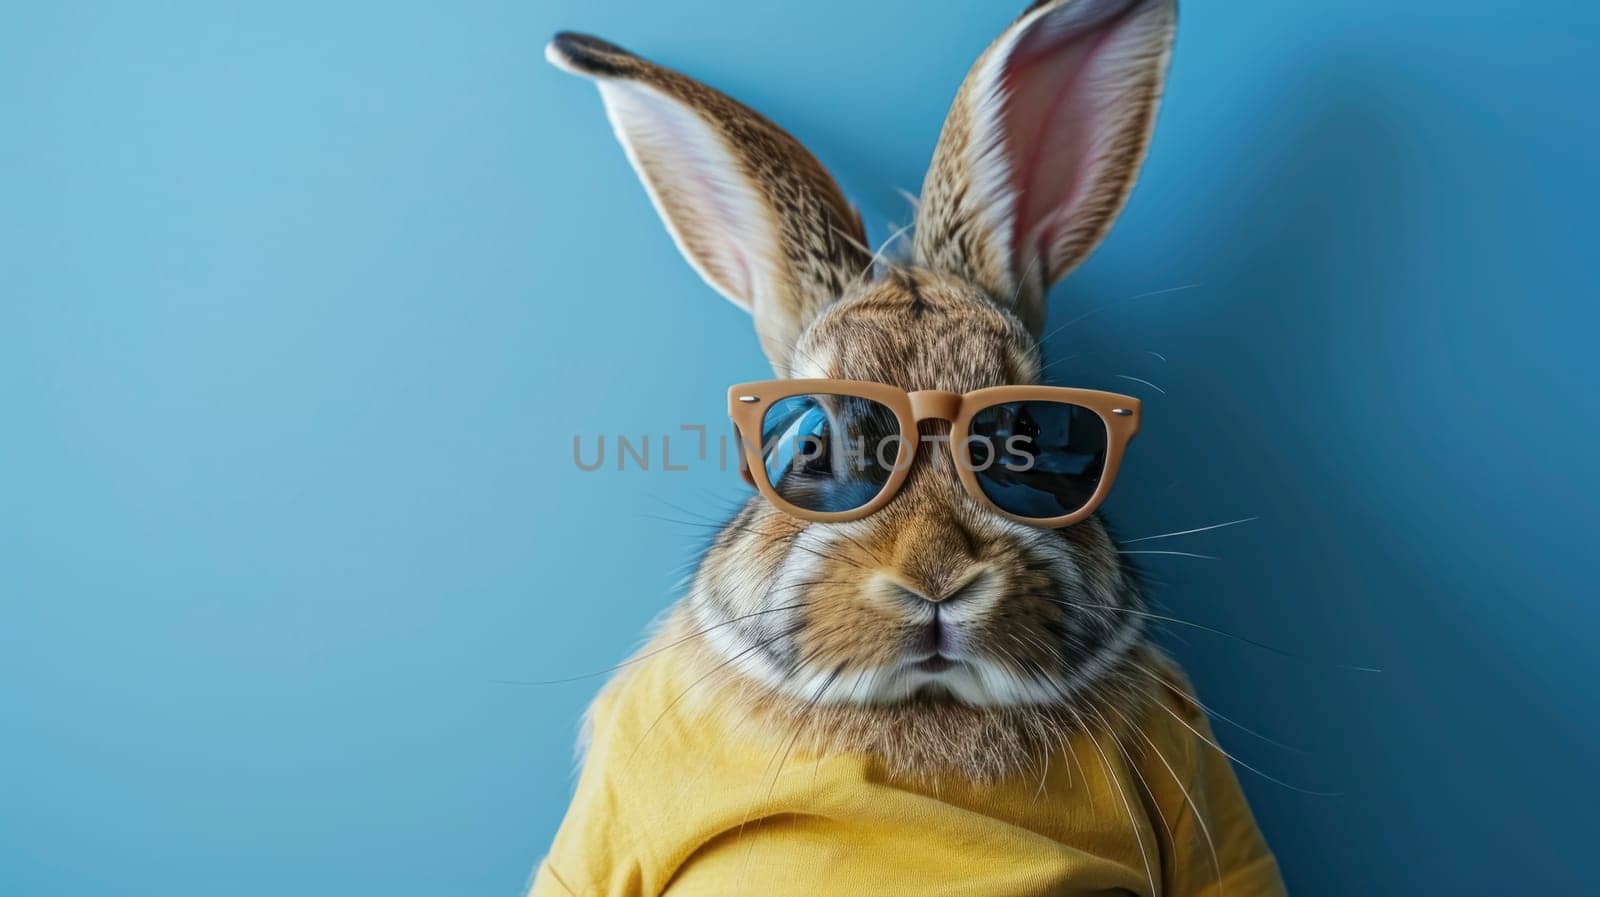 Cool rabbit wearing sunglasses and yellow tee